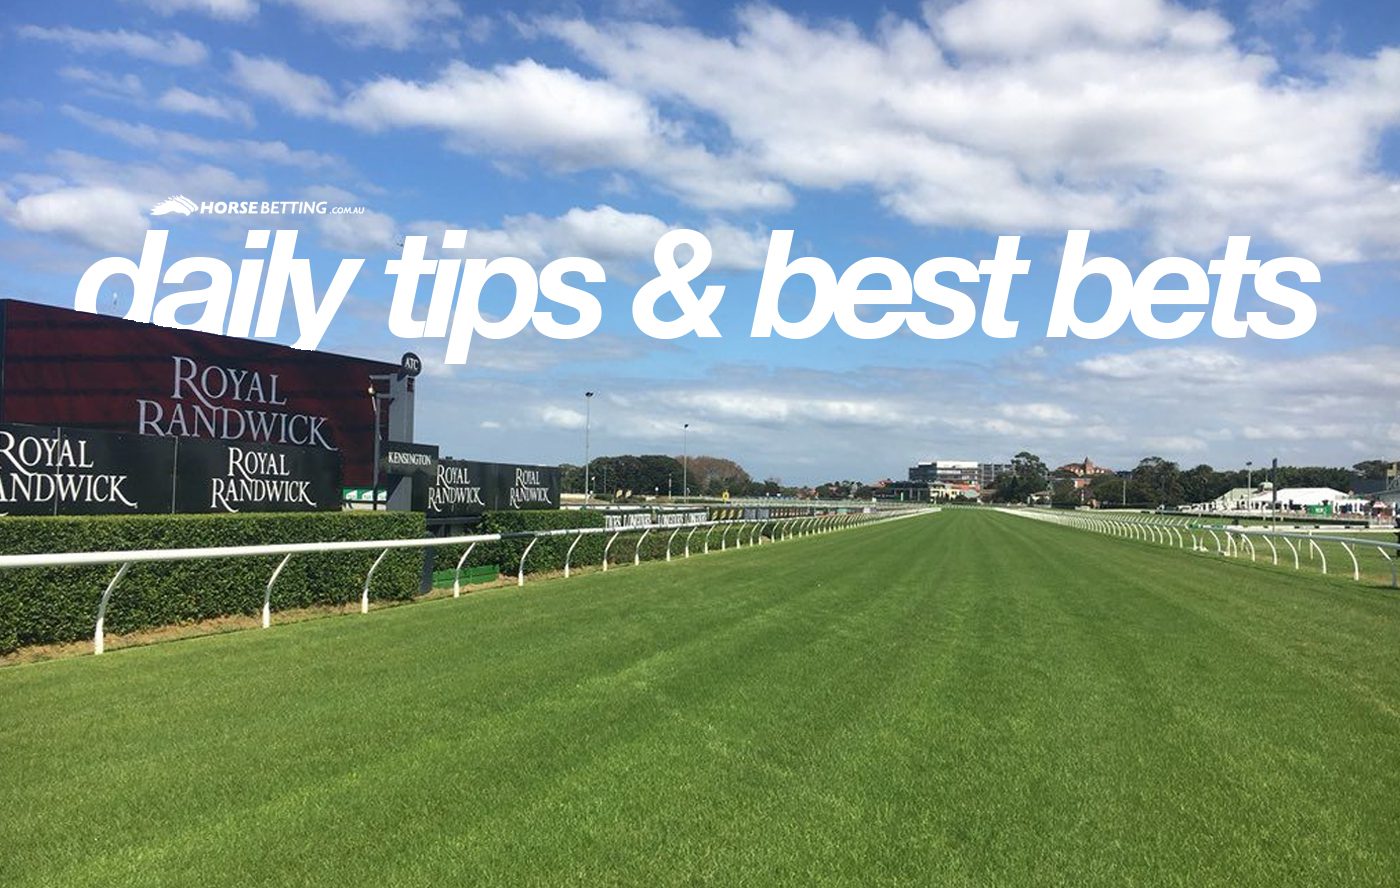 Wednesday horse racing tips & best bets